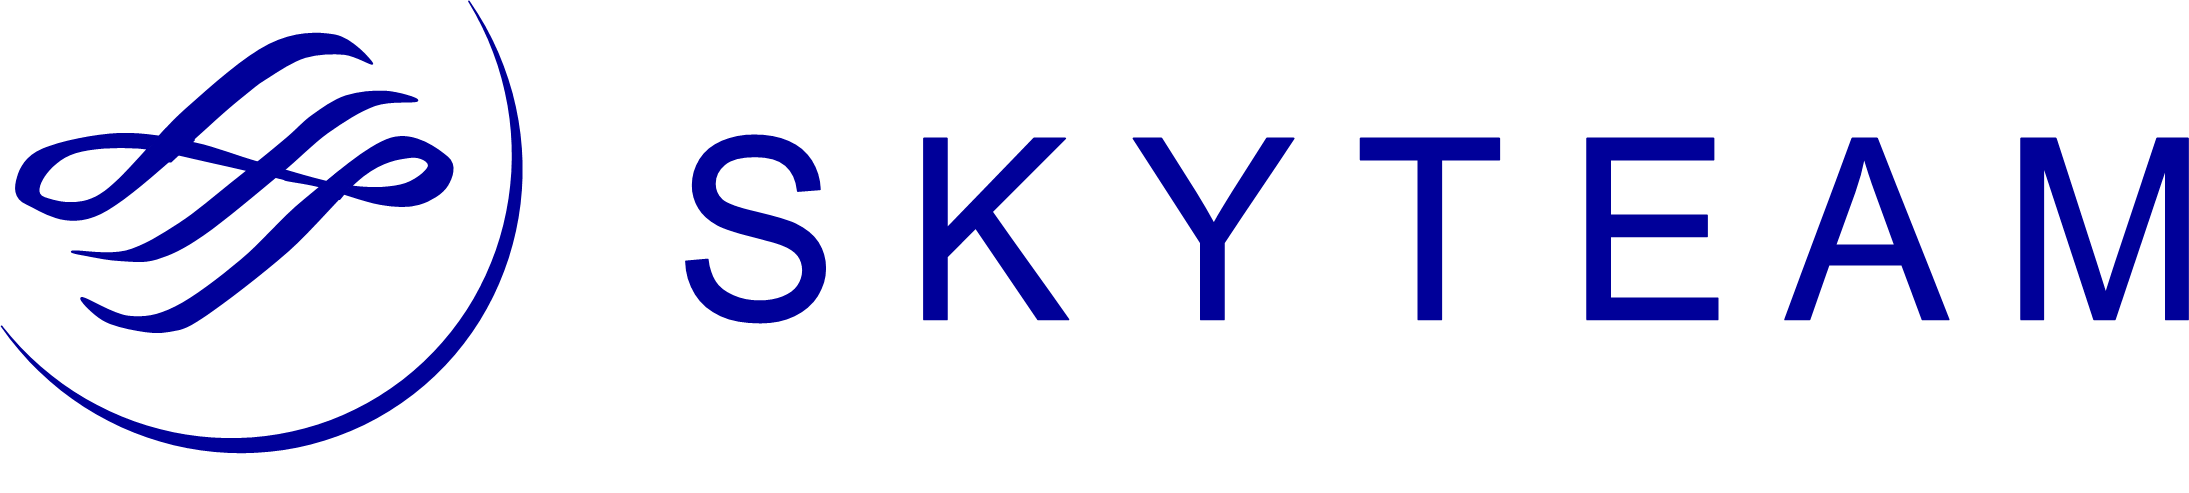 Skyteam_Alliance_Logo.png